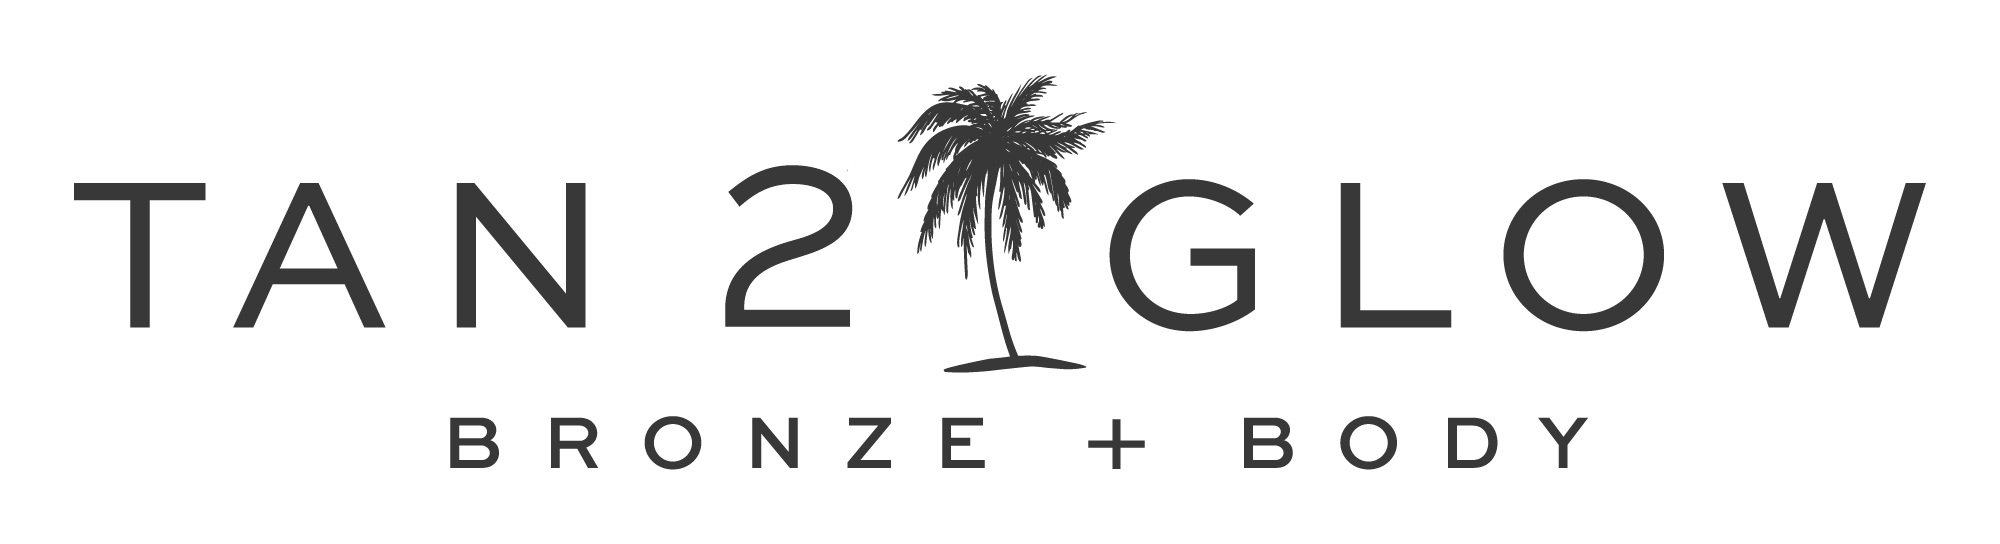 Tan2Glow Logo.png